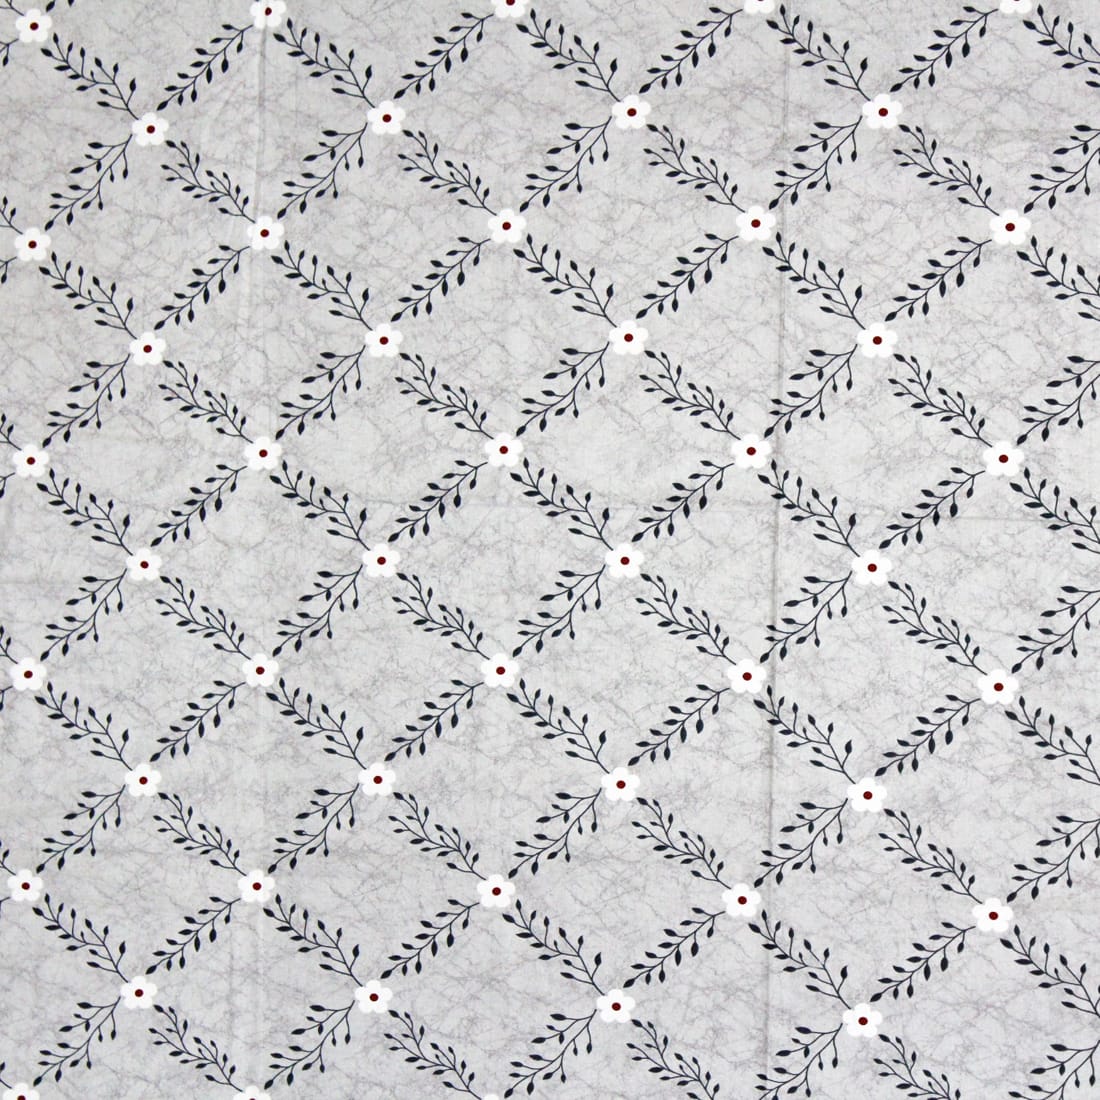 Printed Floral Cotton 2 Pcs Bolster Cover set - Grey